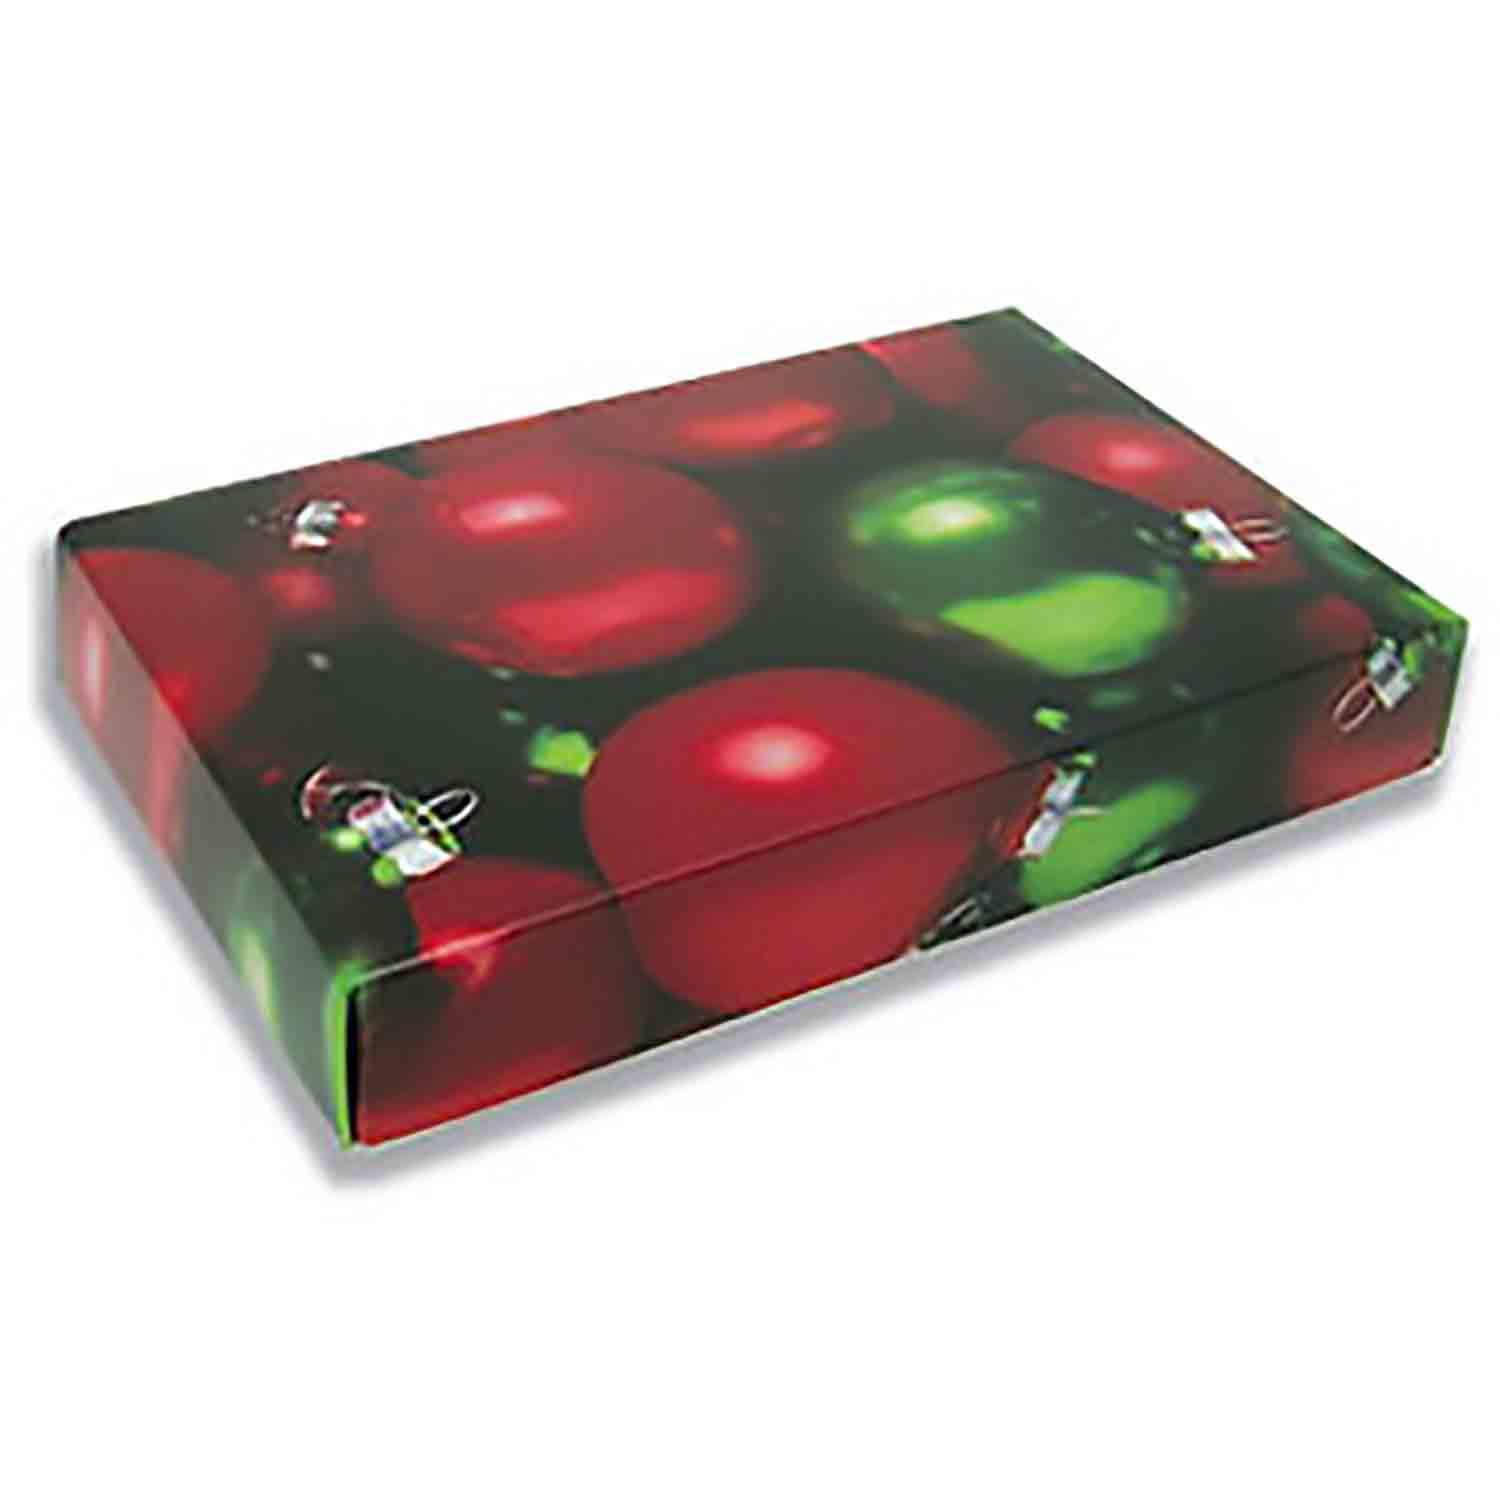 1 lb Ornament Candy Box